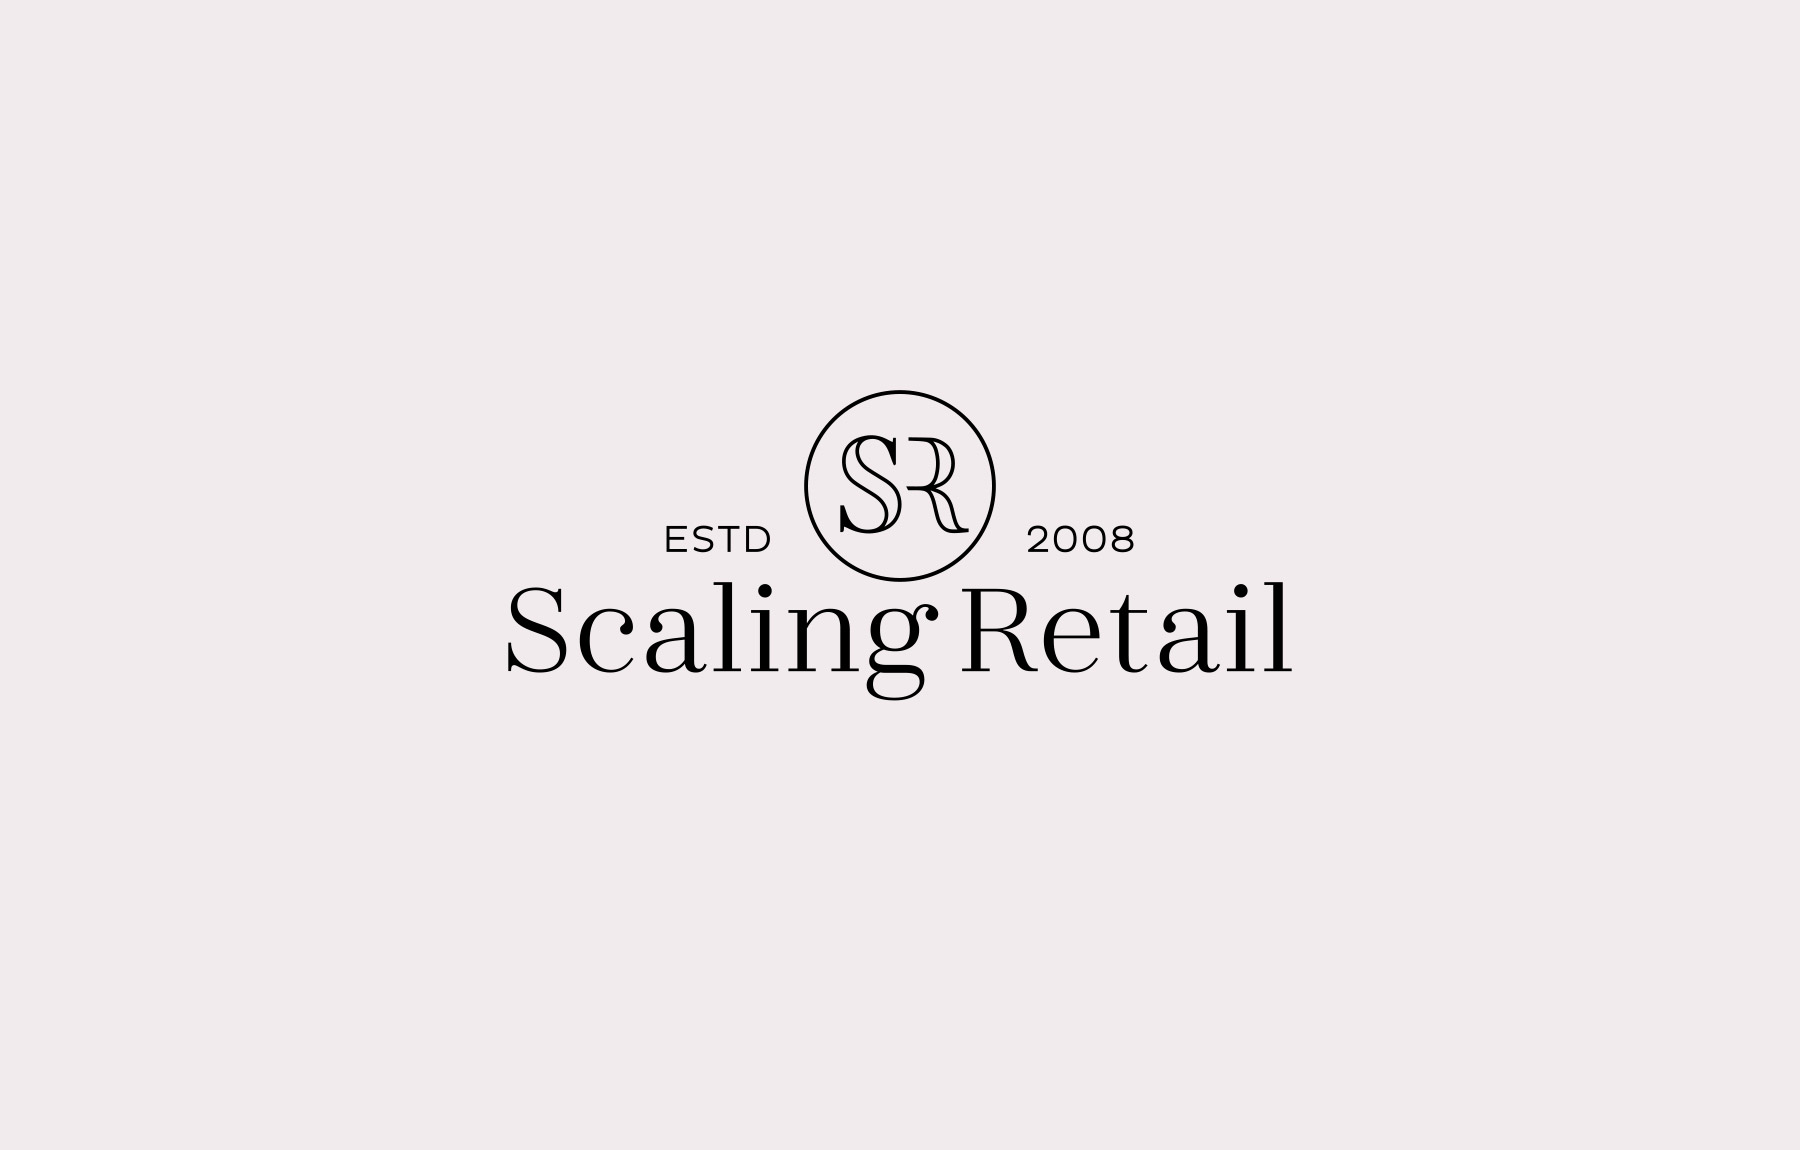 Scaling Retail company logo